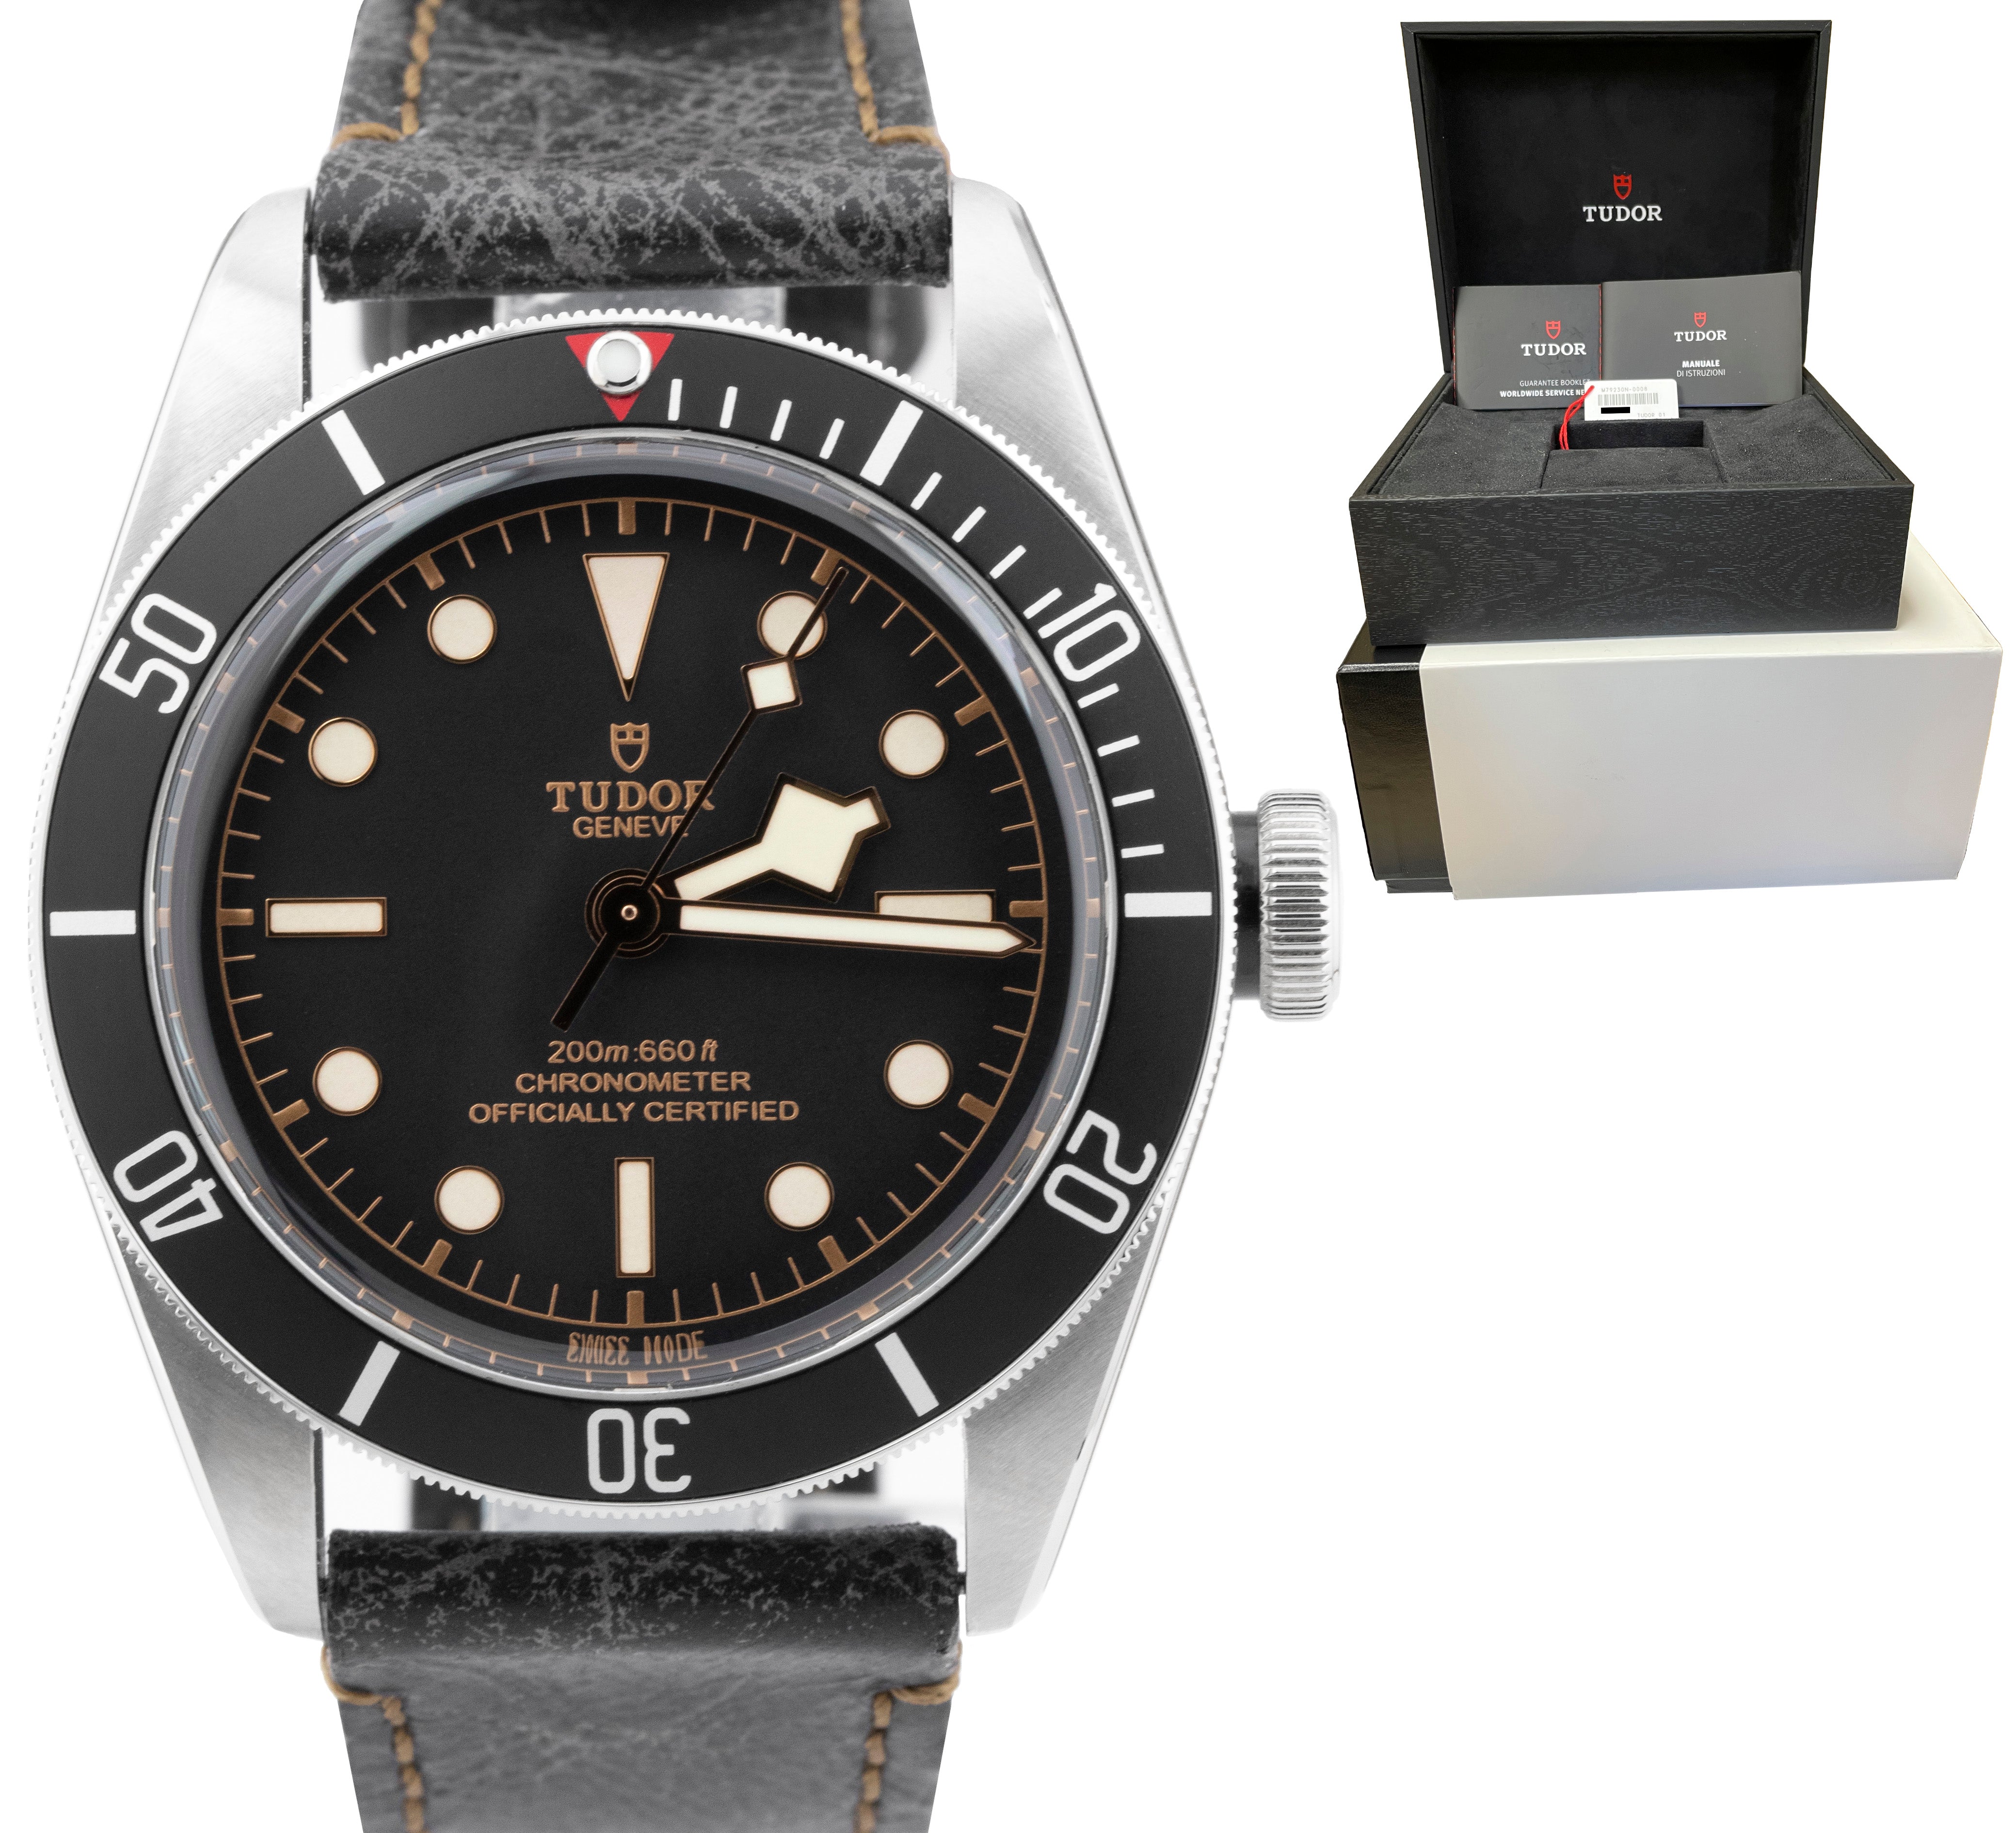 MINT Tudor Black Bay Heritage 79230 N Black Stainless Steel 41mm Automatic Watch